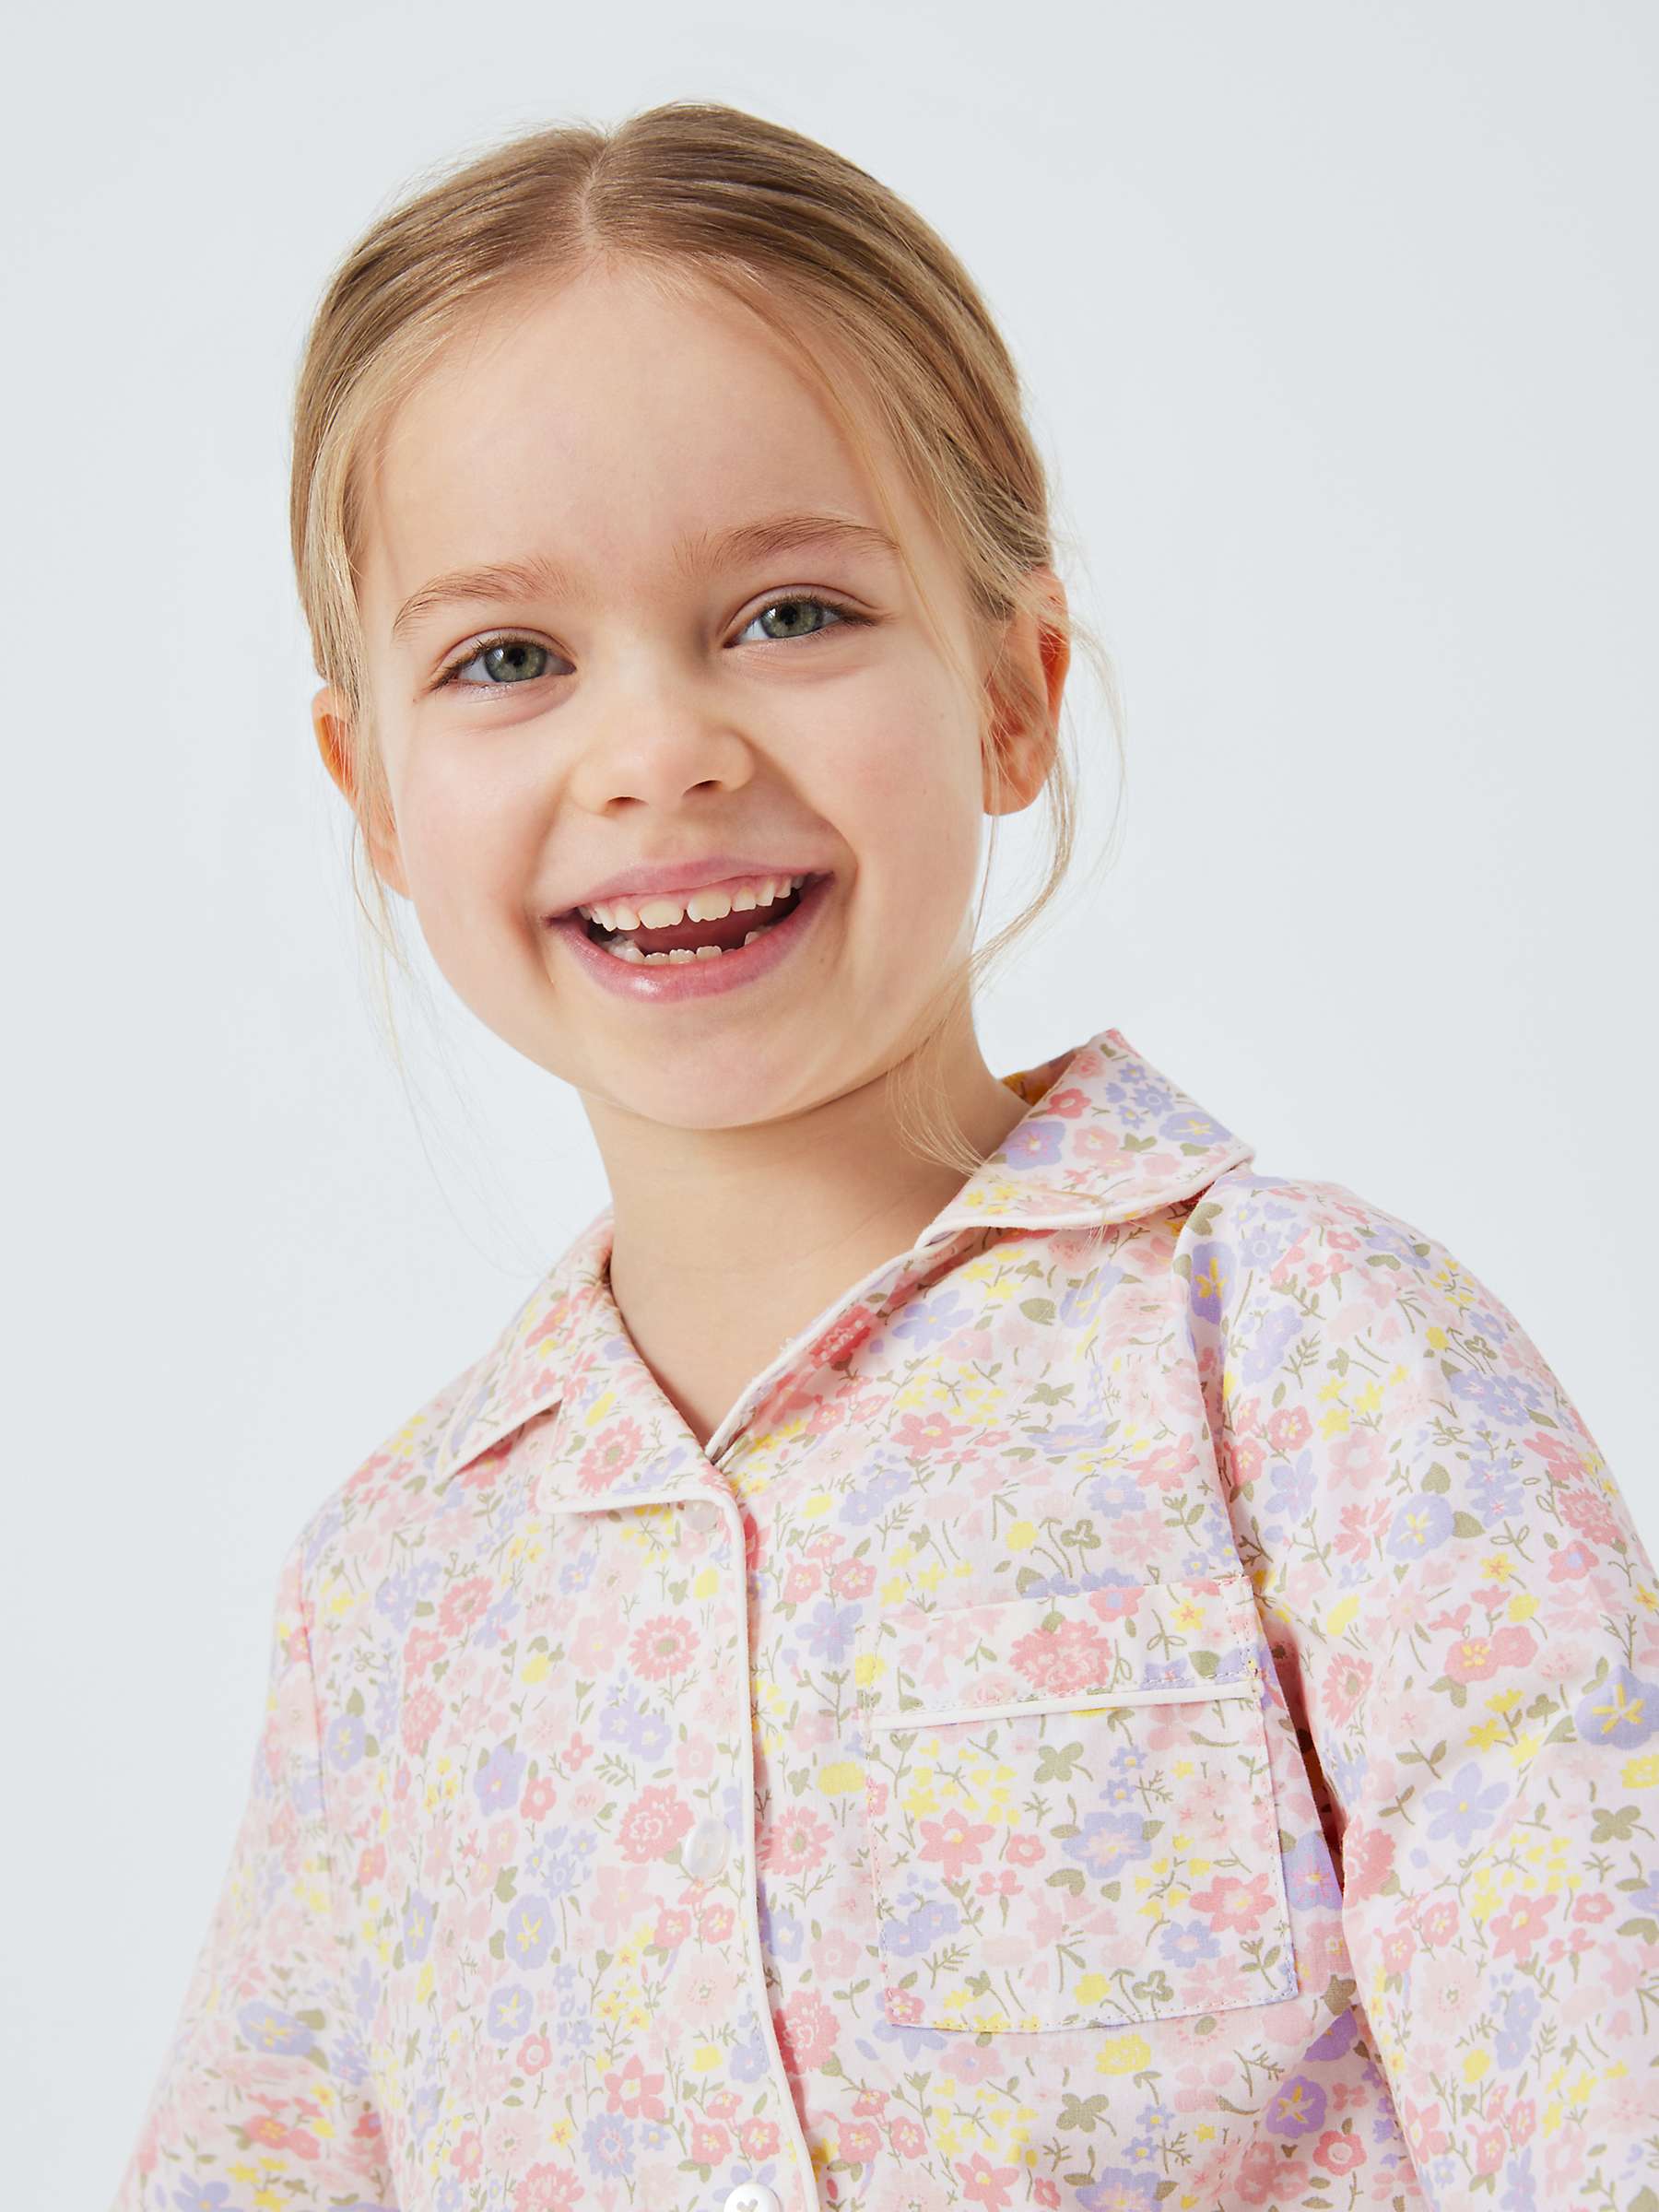 Buy John Lewis Kids' Ditsy Floral Print Pyjamas, Multi Online at johnlewis.com